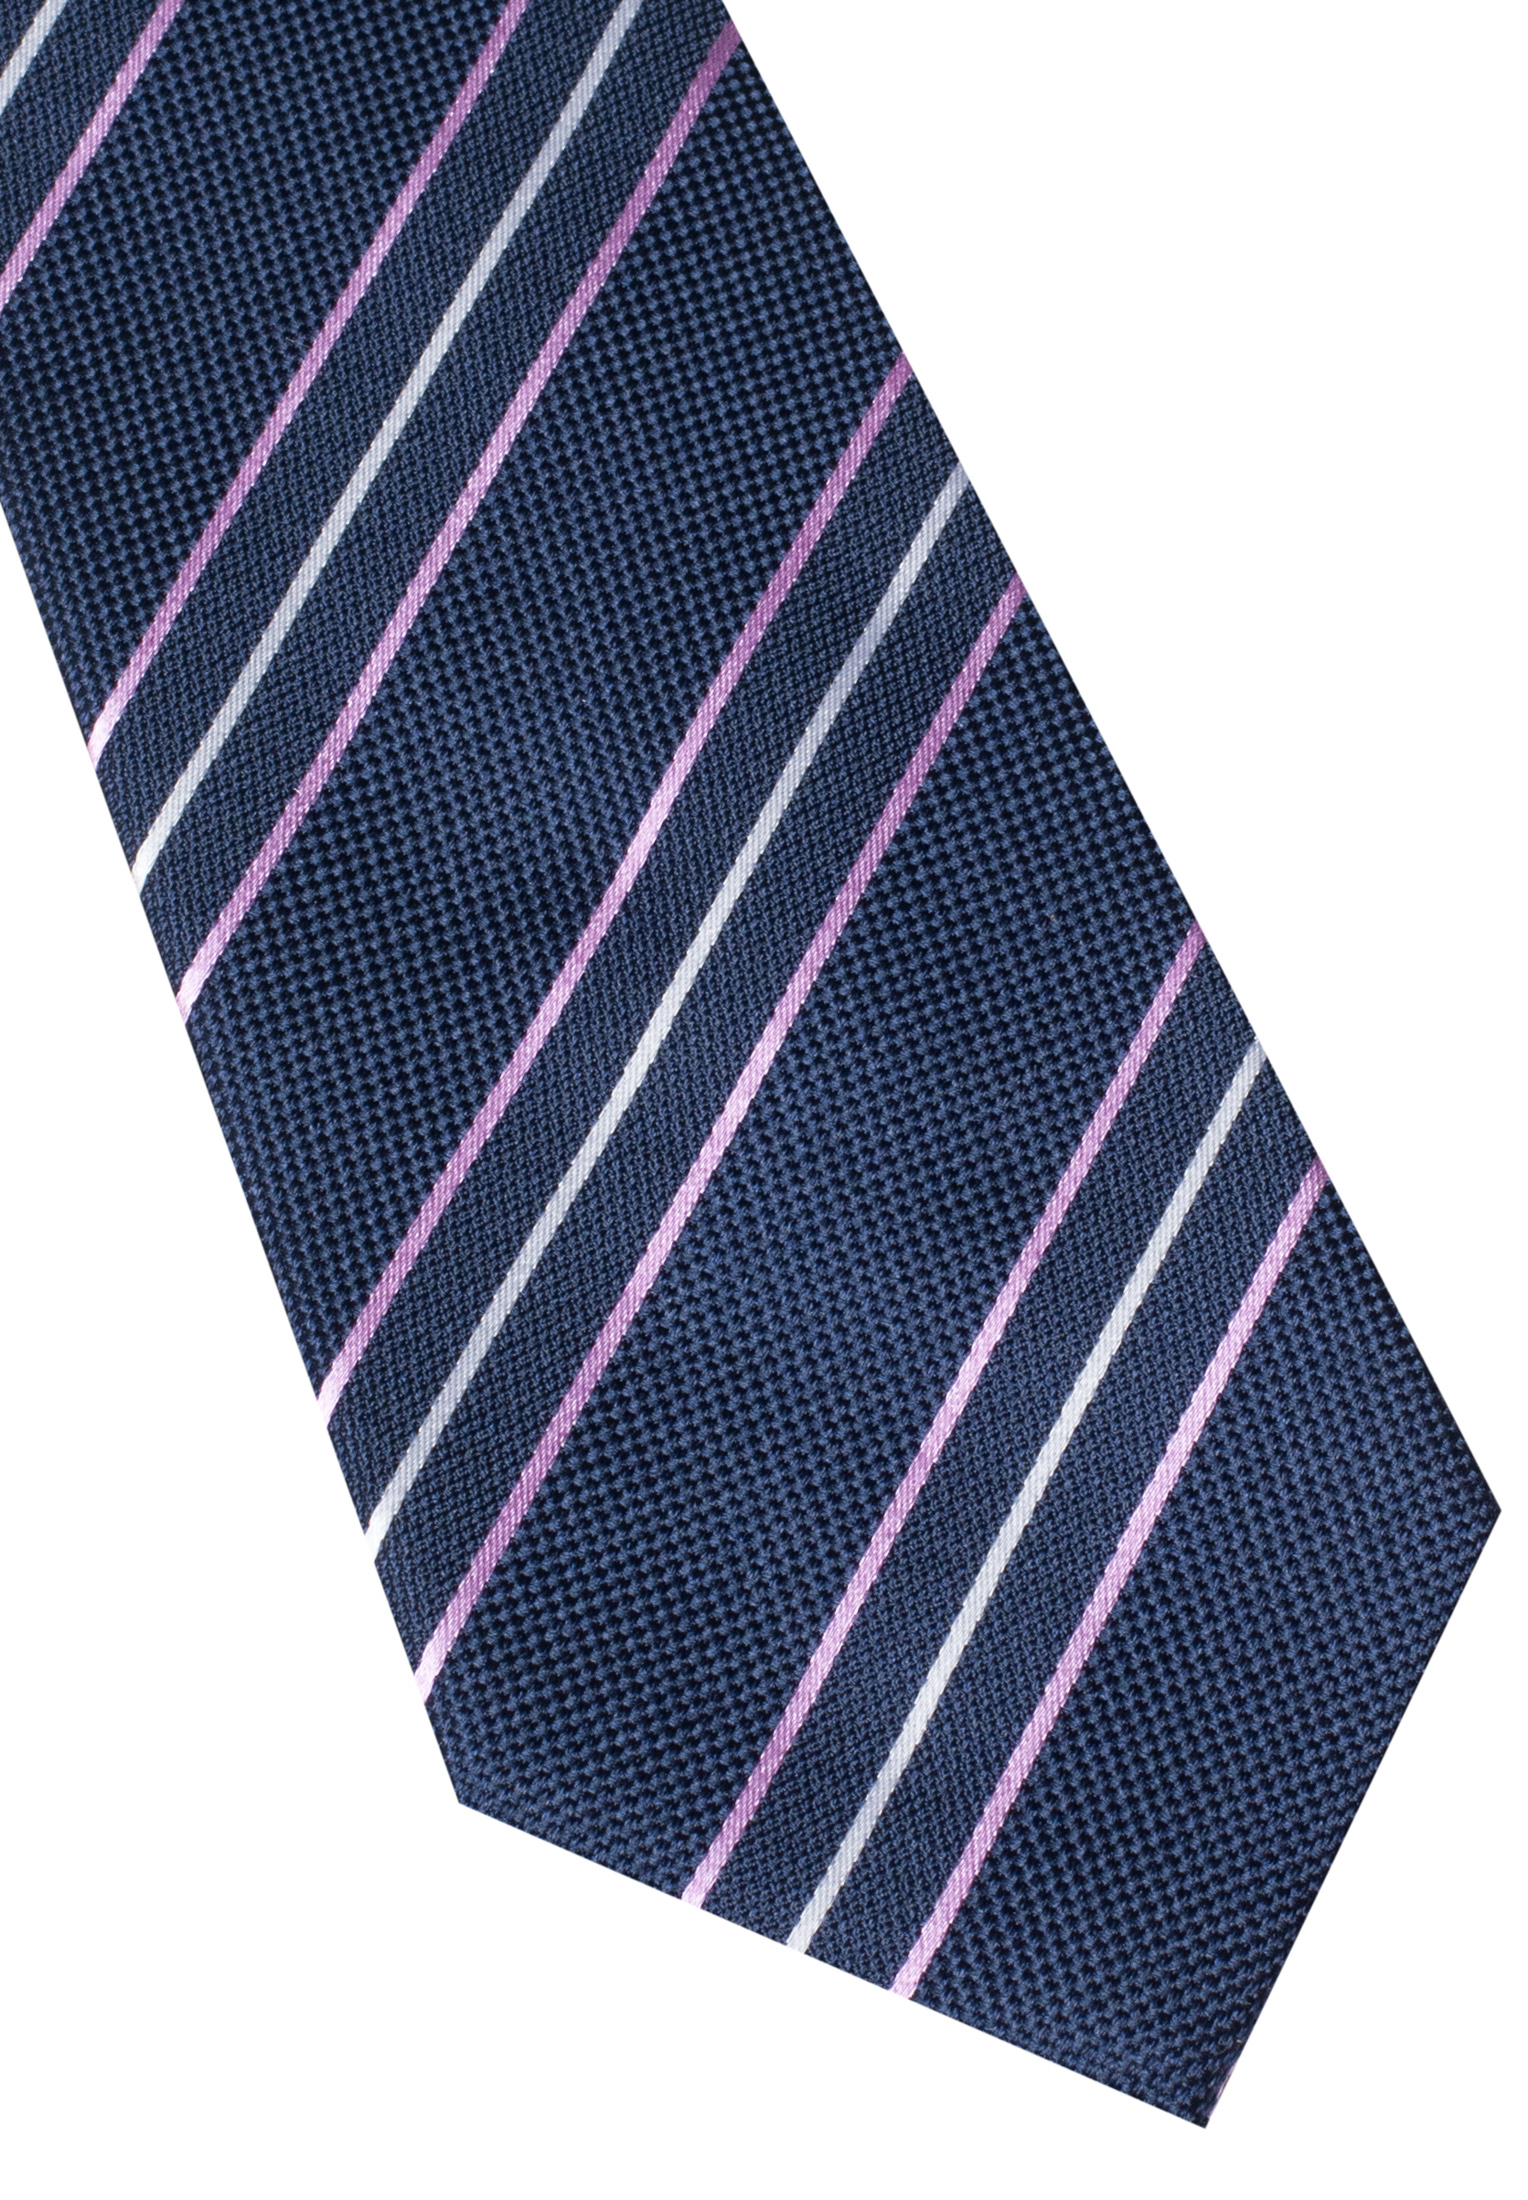 Tie in navy/pink striped